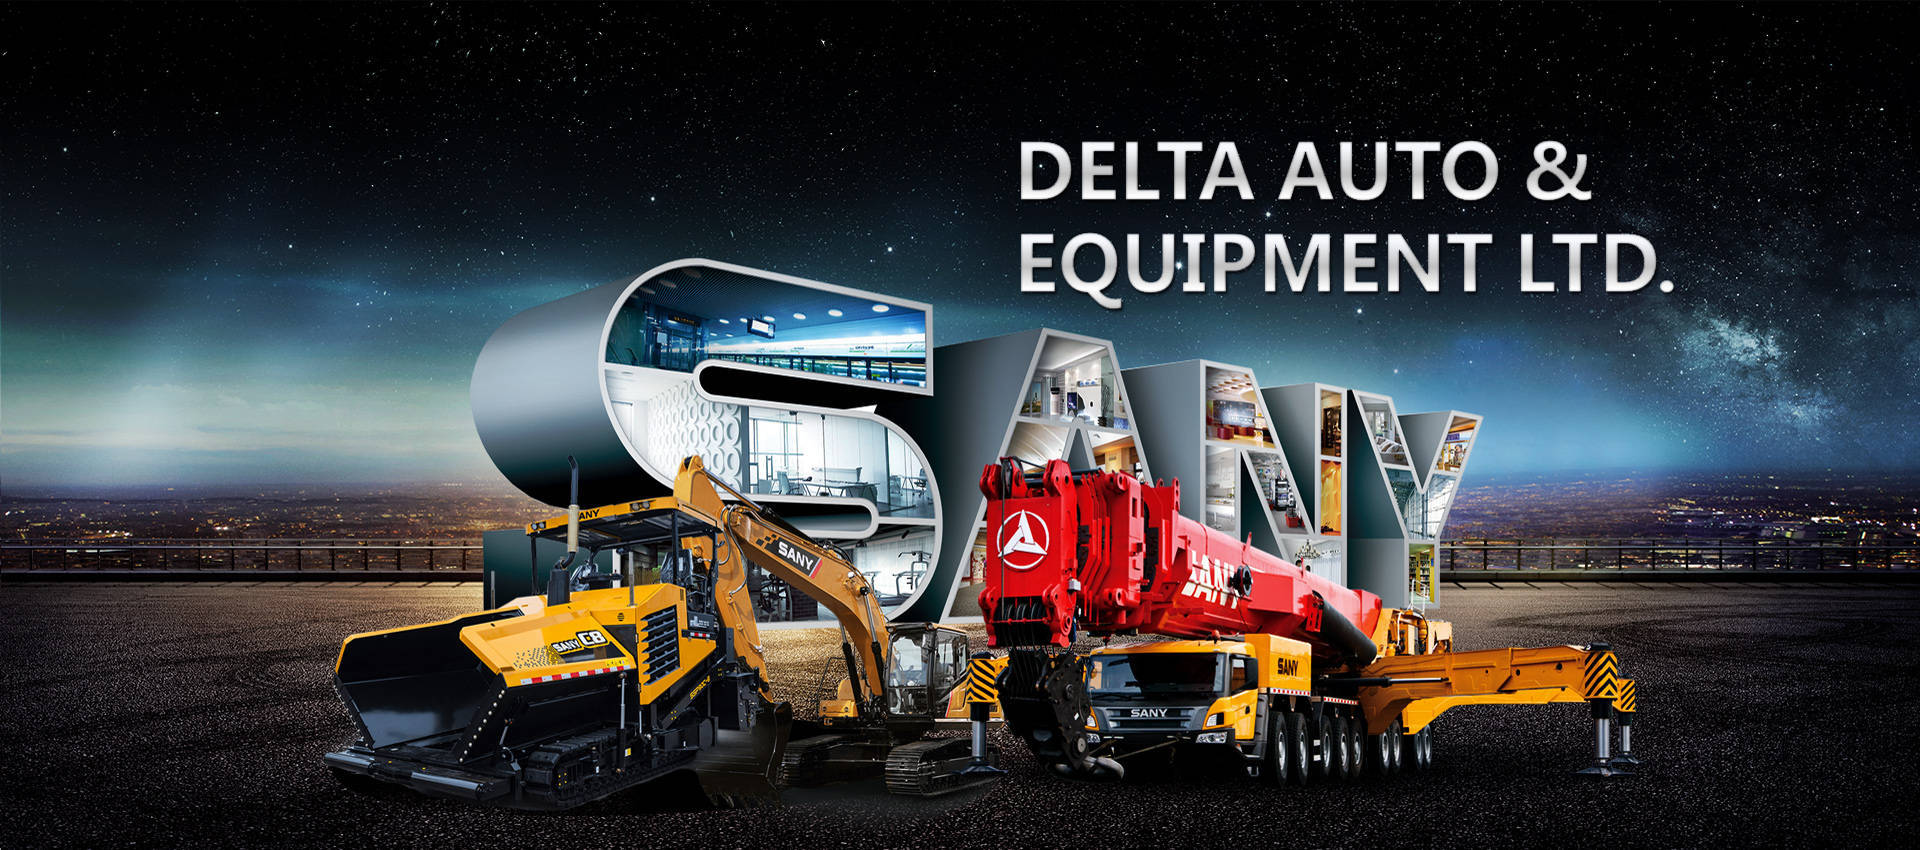 Delta Auto & Equipment